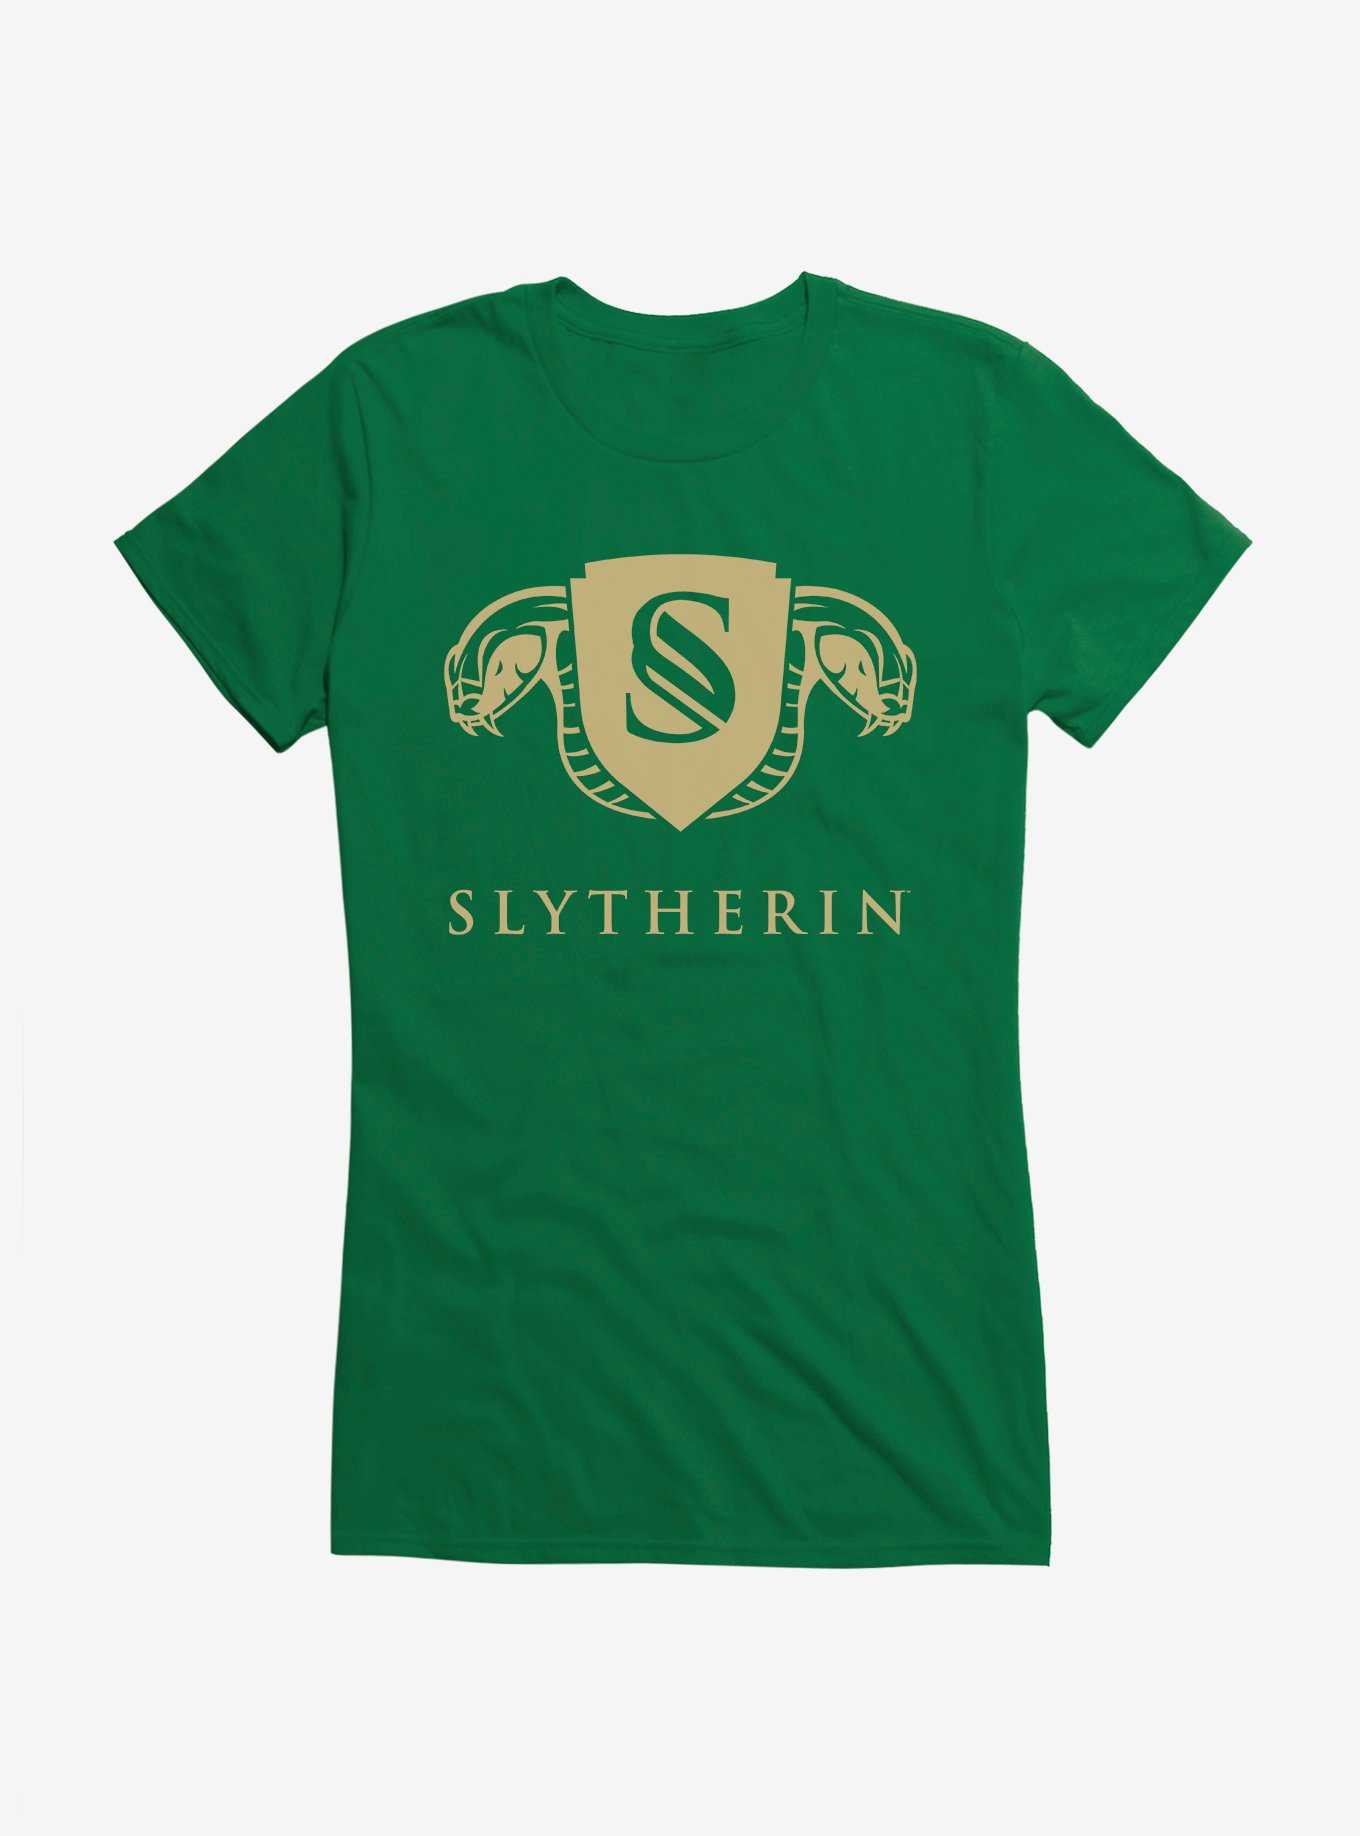 Slytherin Crest Tank, Official Harry Potter Merch